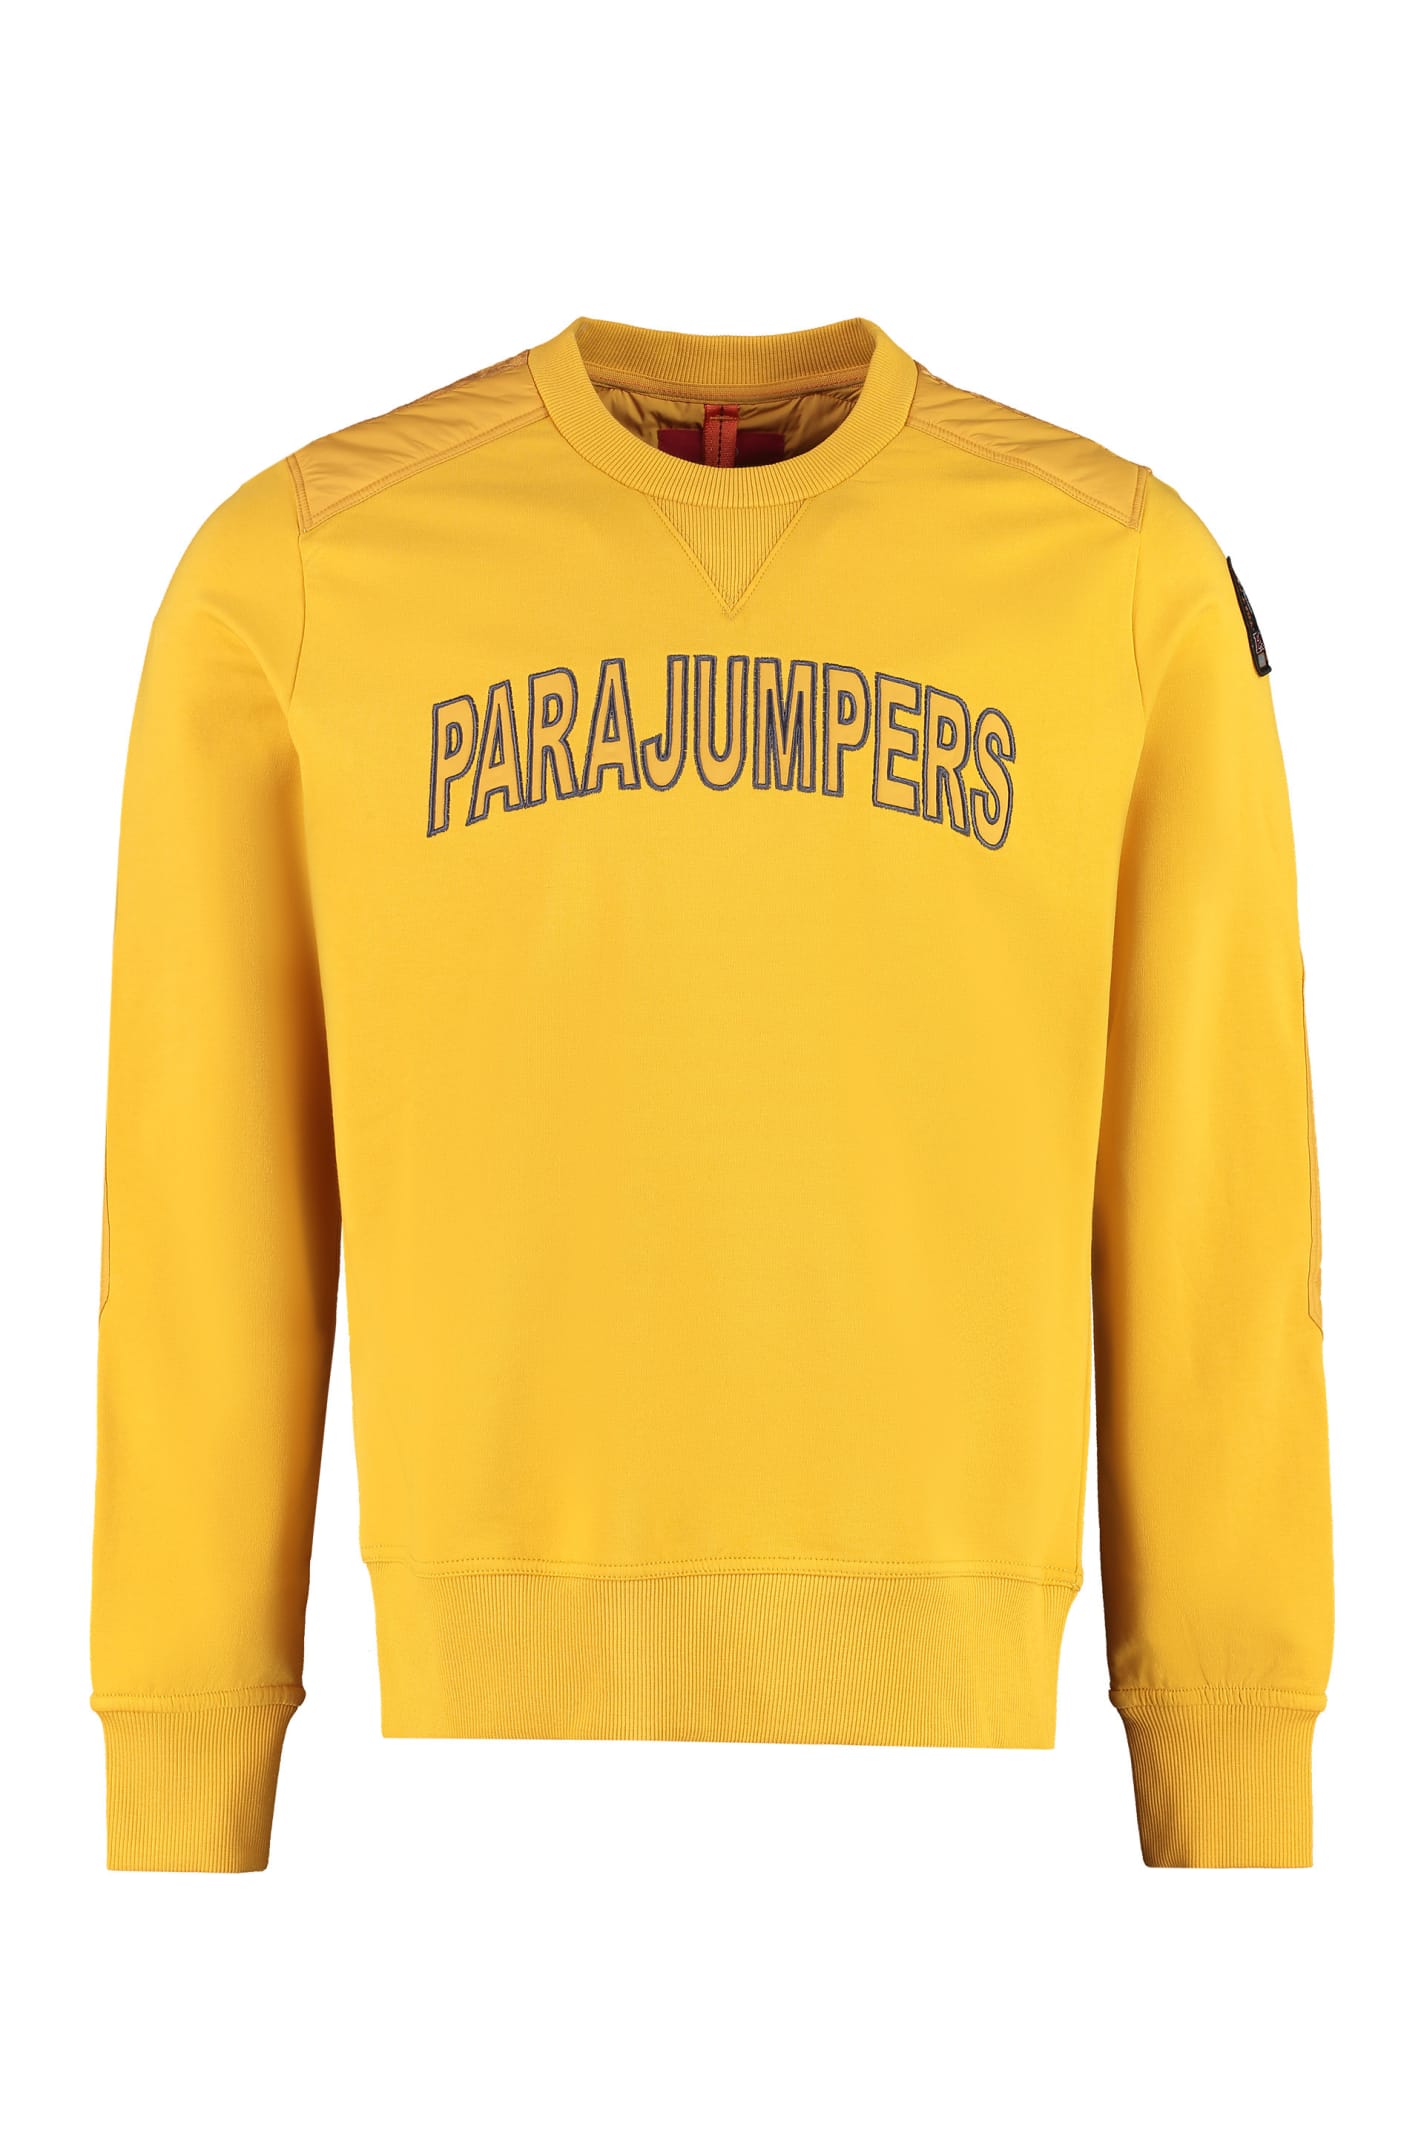 Parajumpers Grady Logo Detail Cotton Sweatshirt